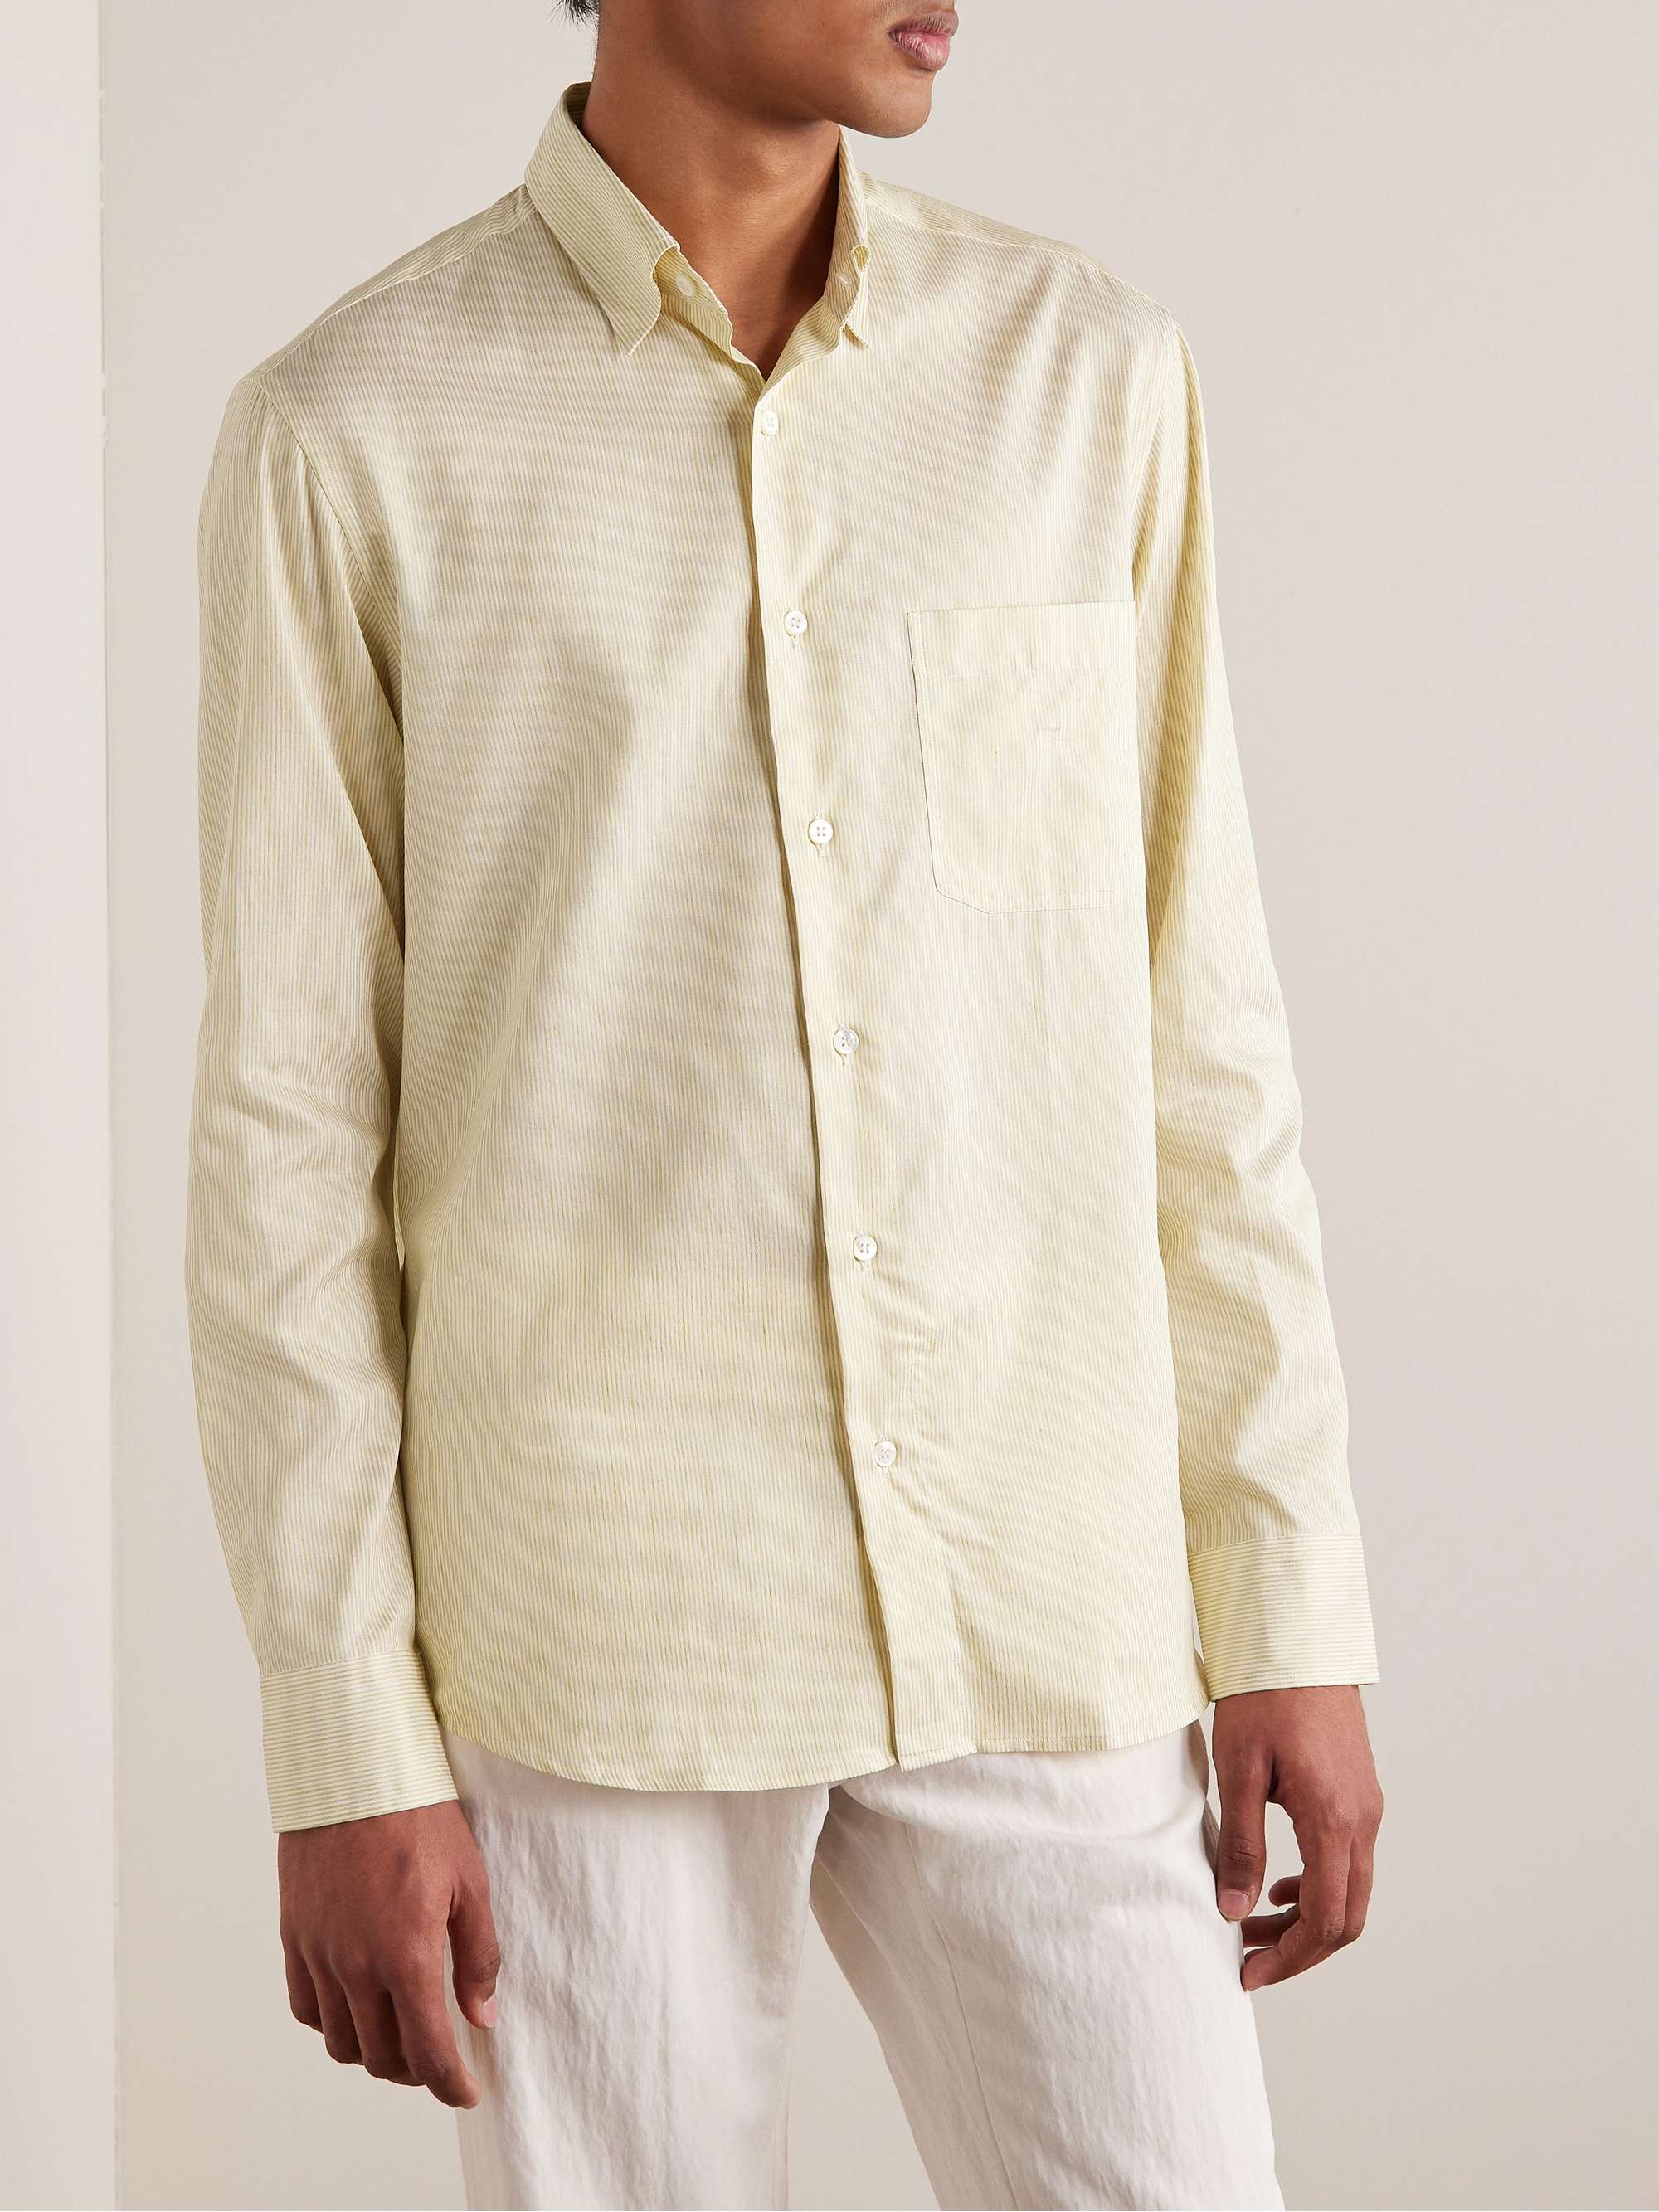 BRIONI Striped Cotton and Linen-Blend Shirt